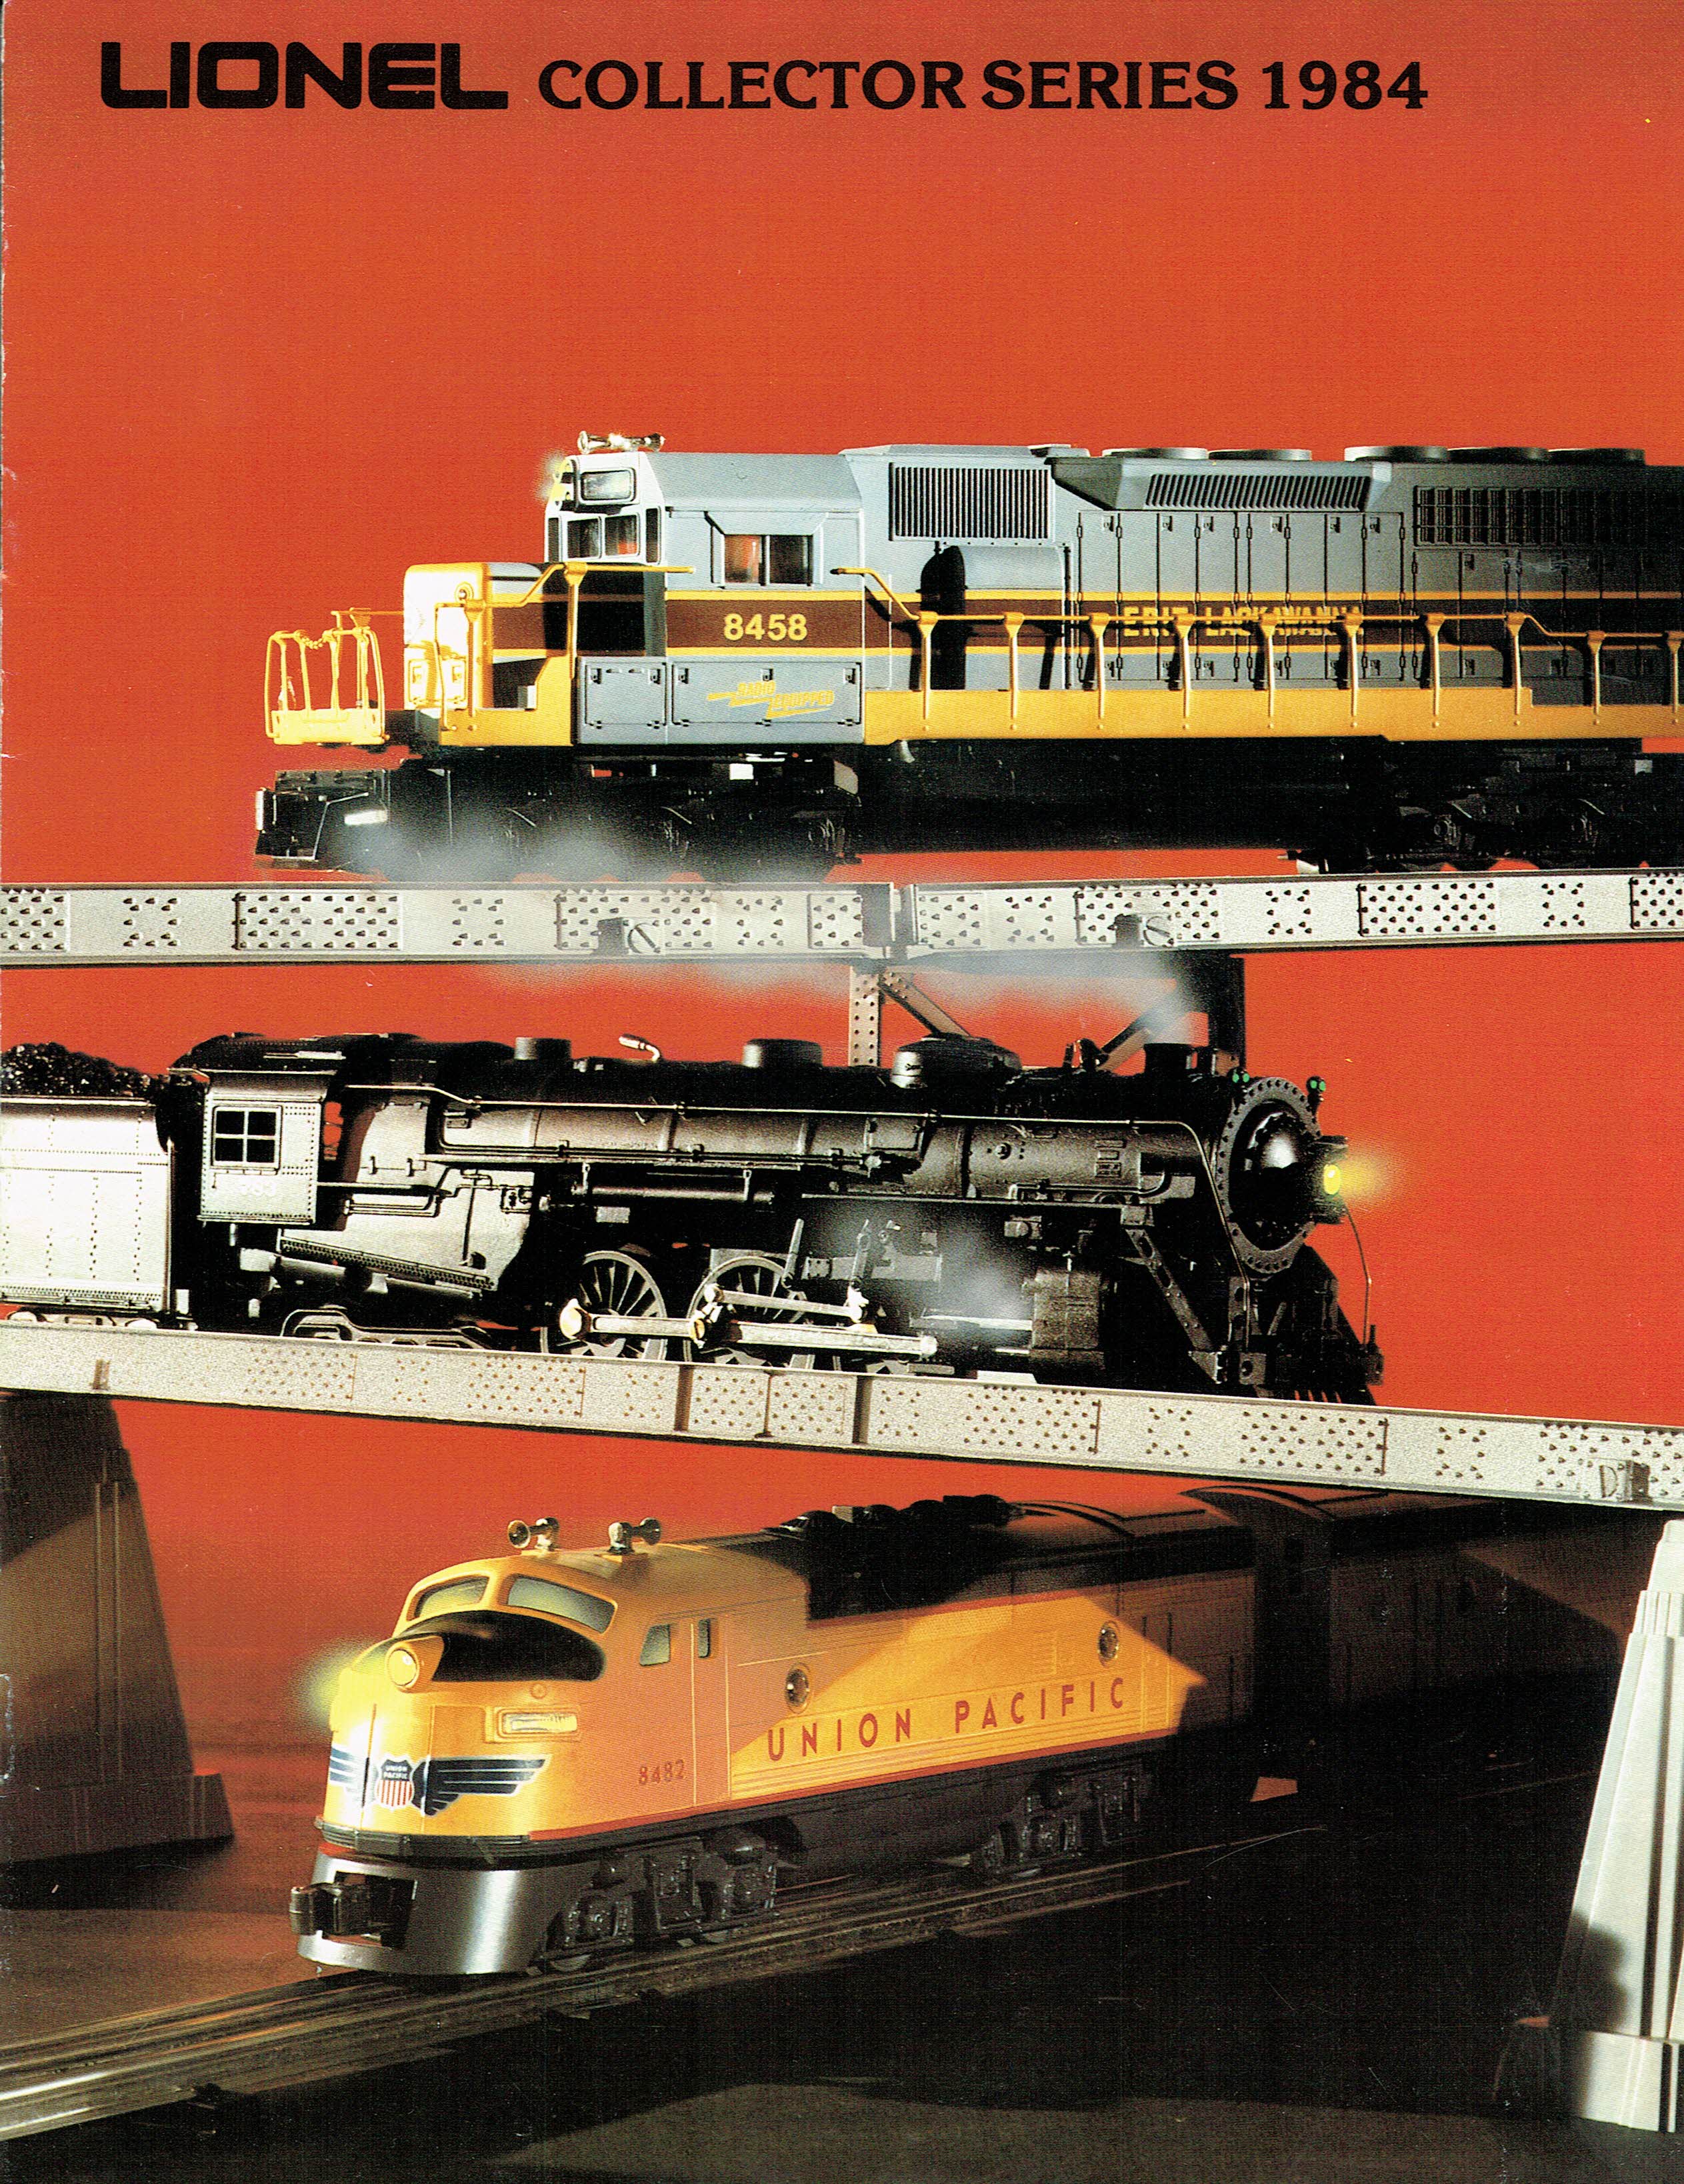 Lionel 1984 Collector Series Catalog image